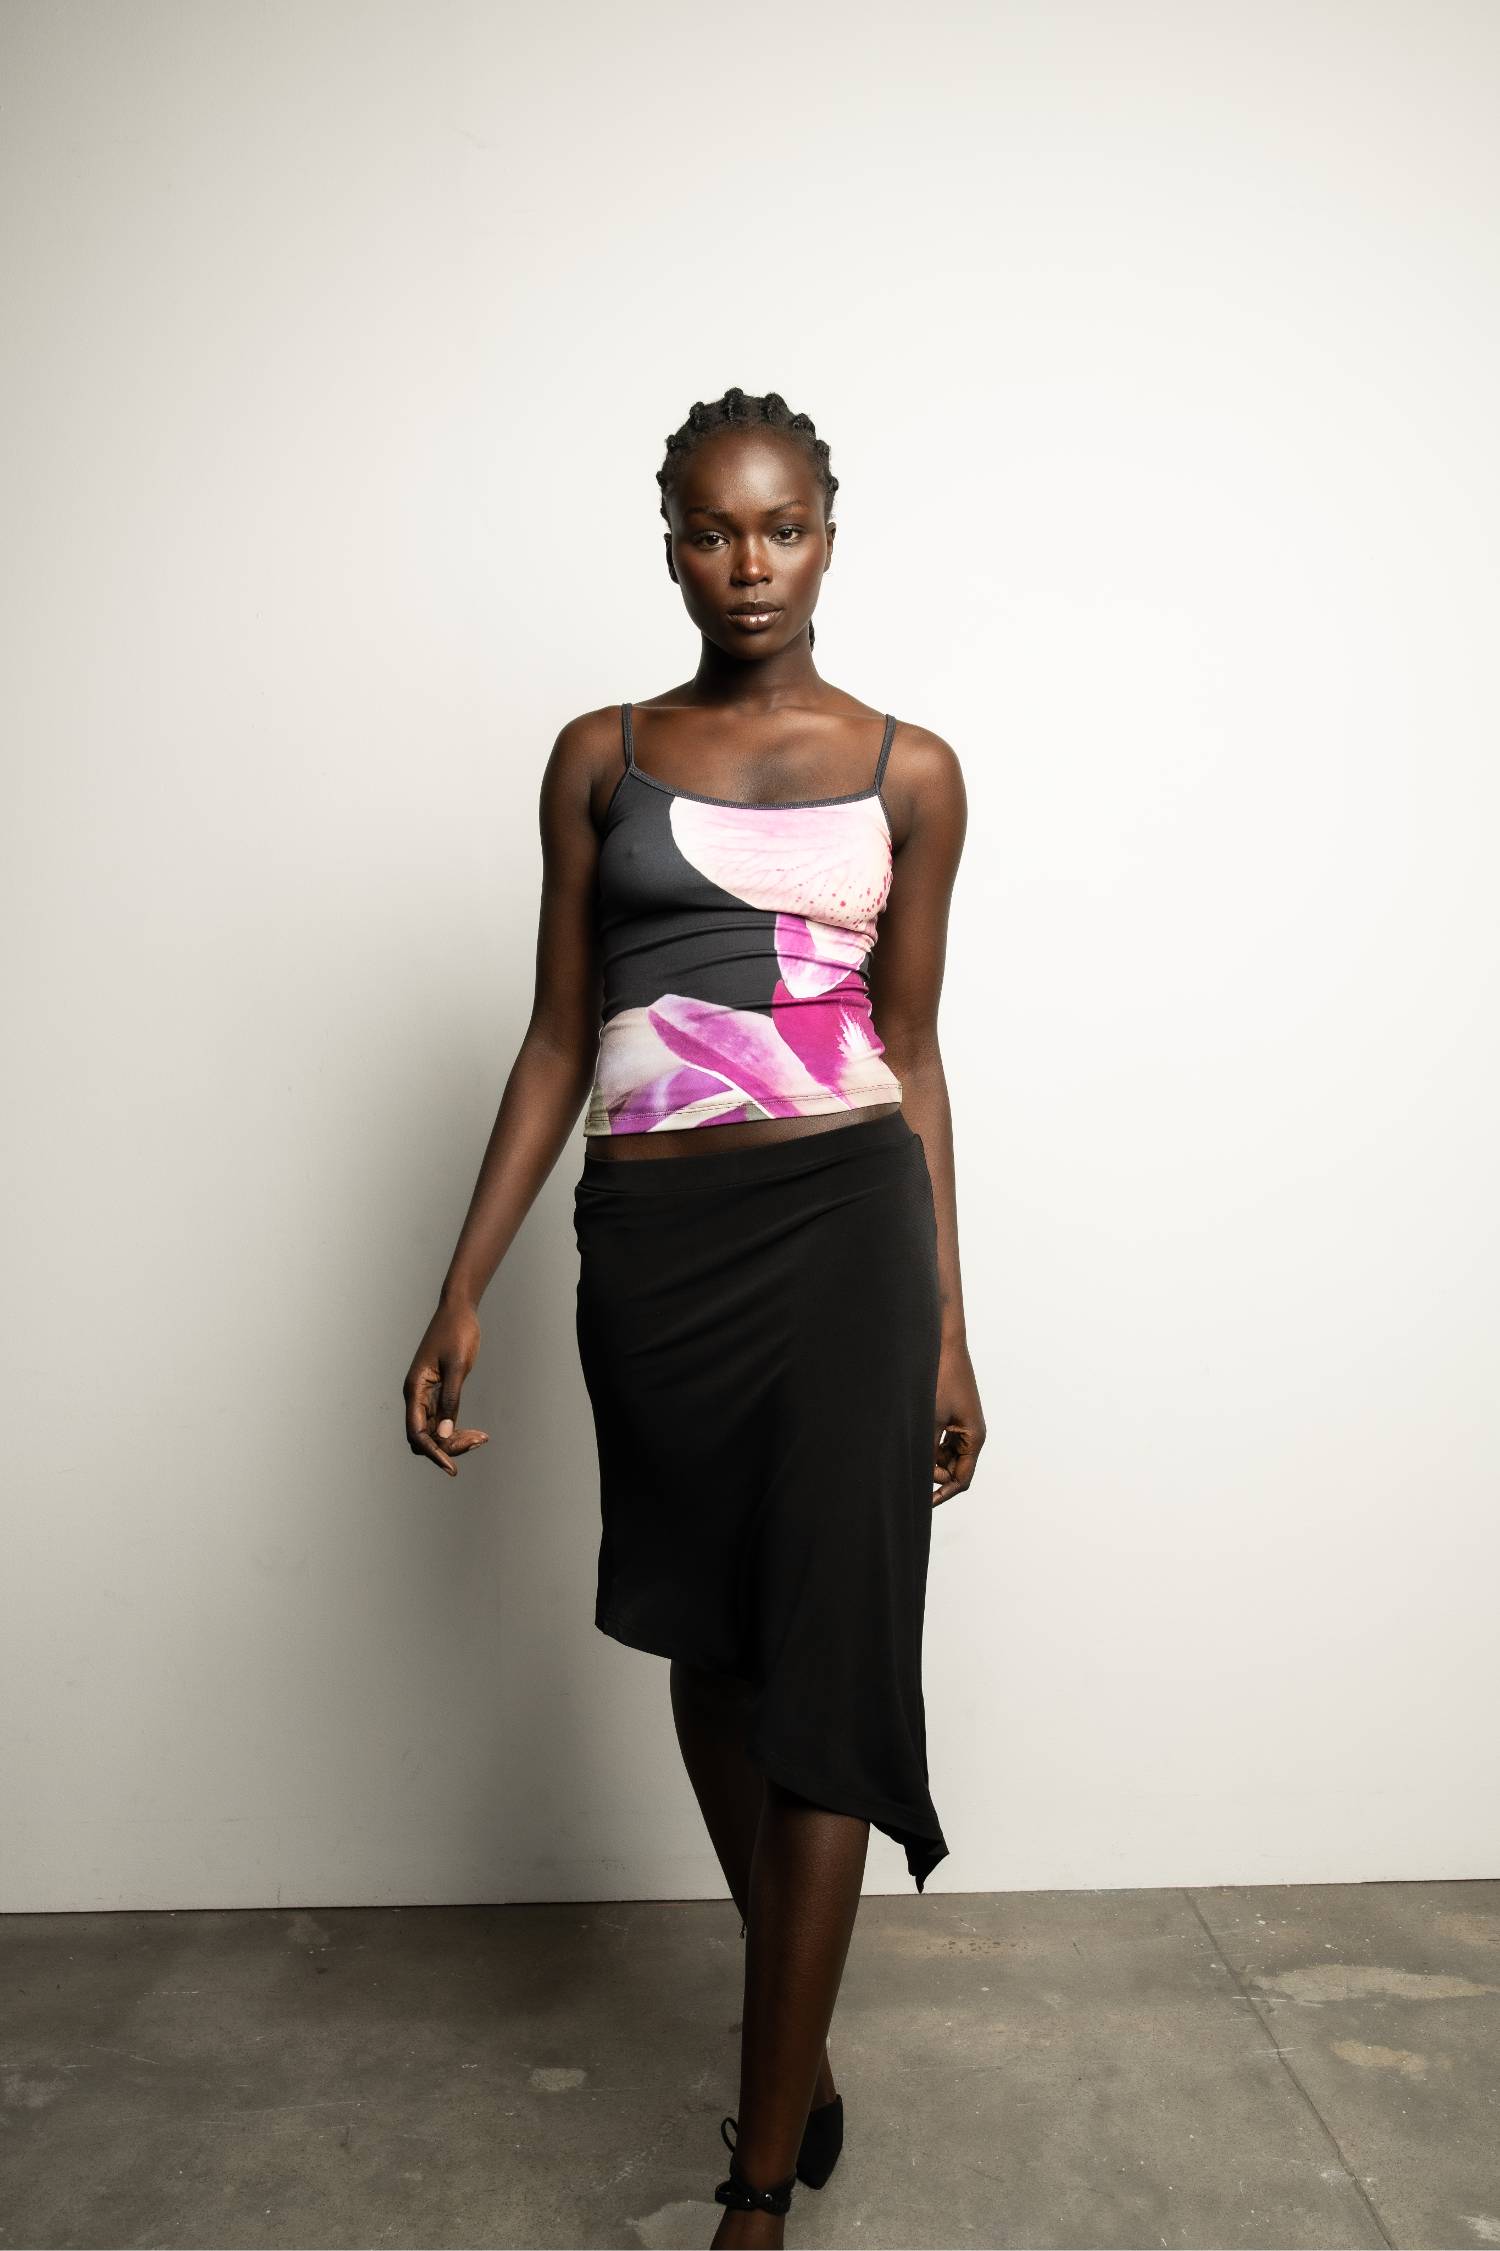 Asymmetric Midi Skirt | Black